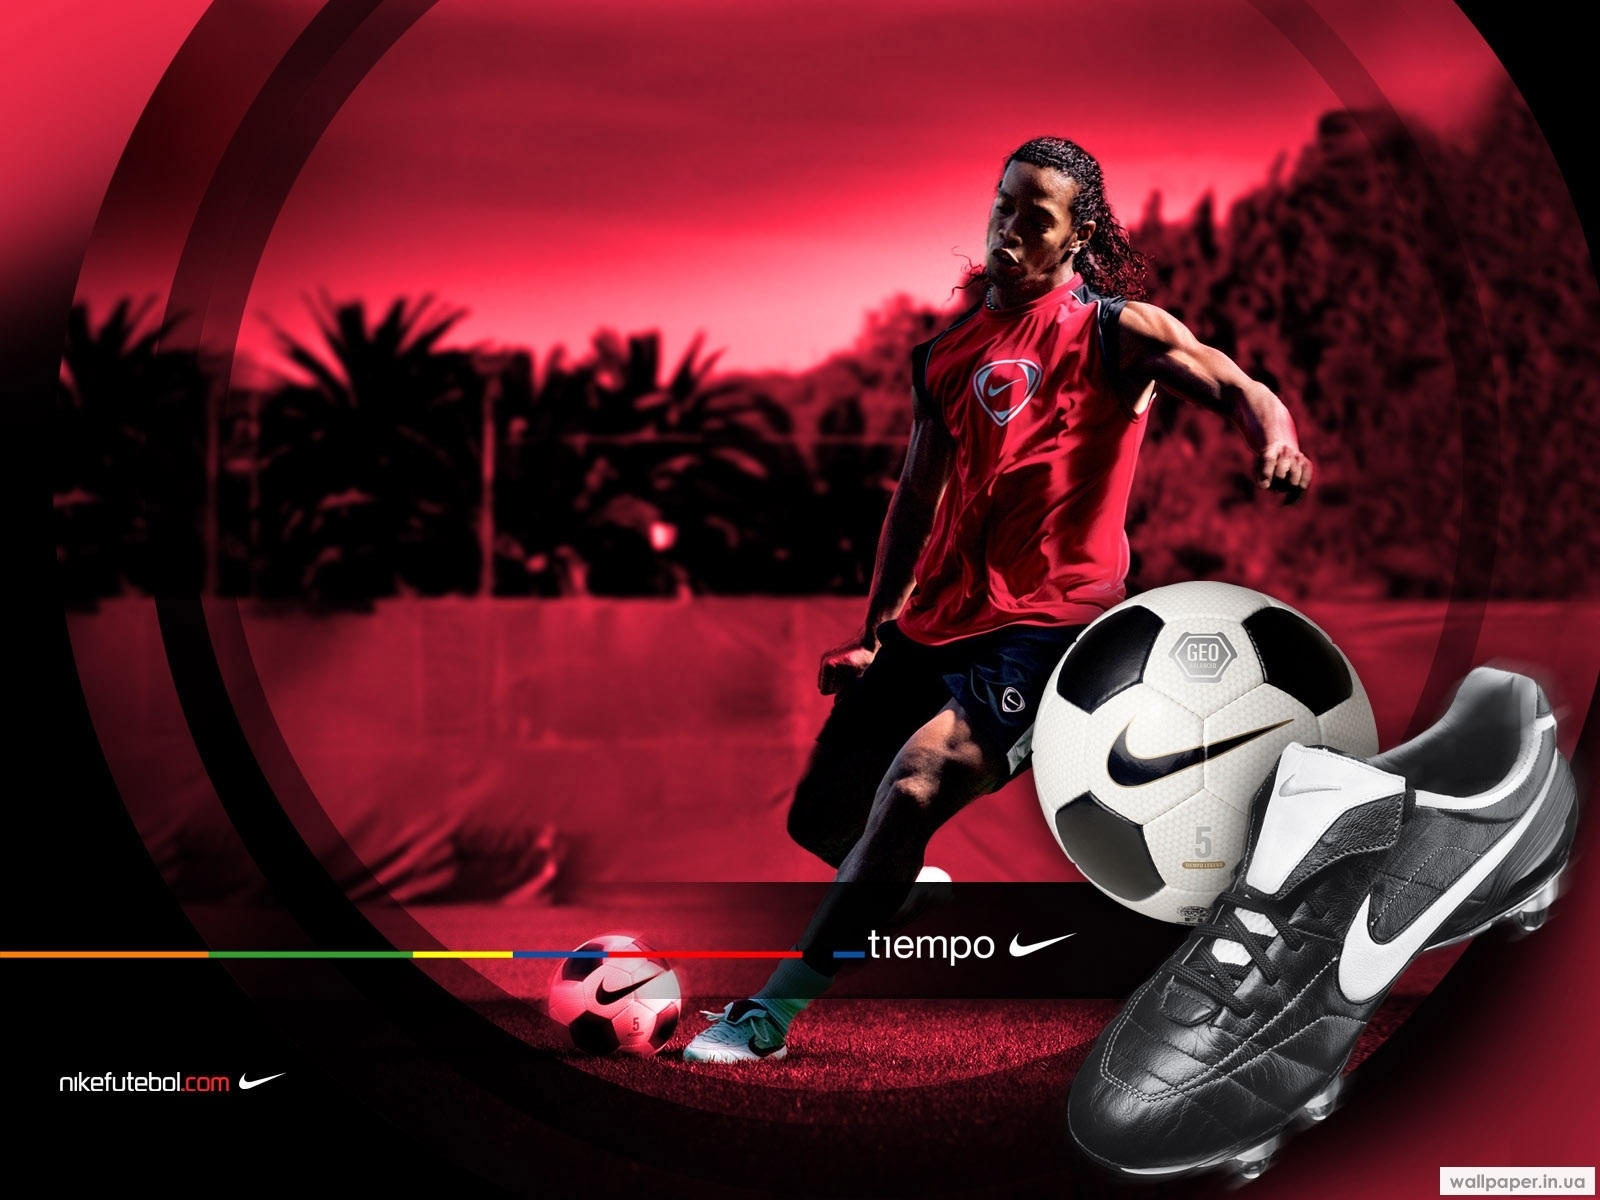 men, football, sports, people, ronaldinho, red High Definition image